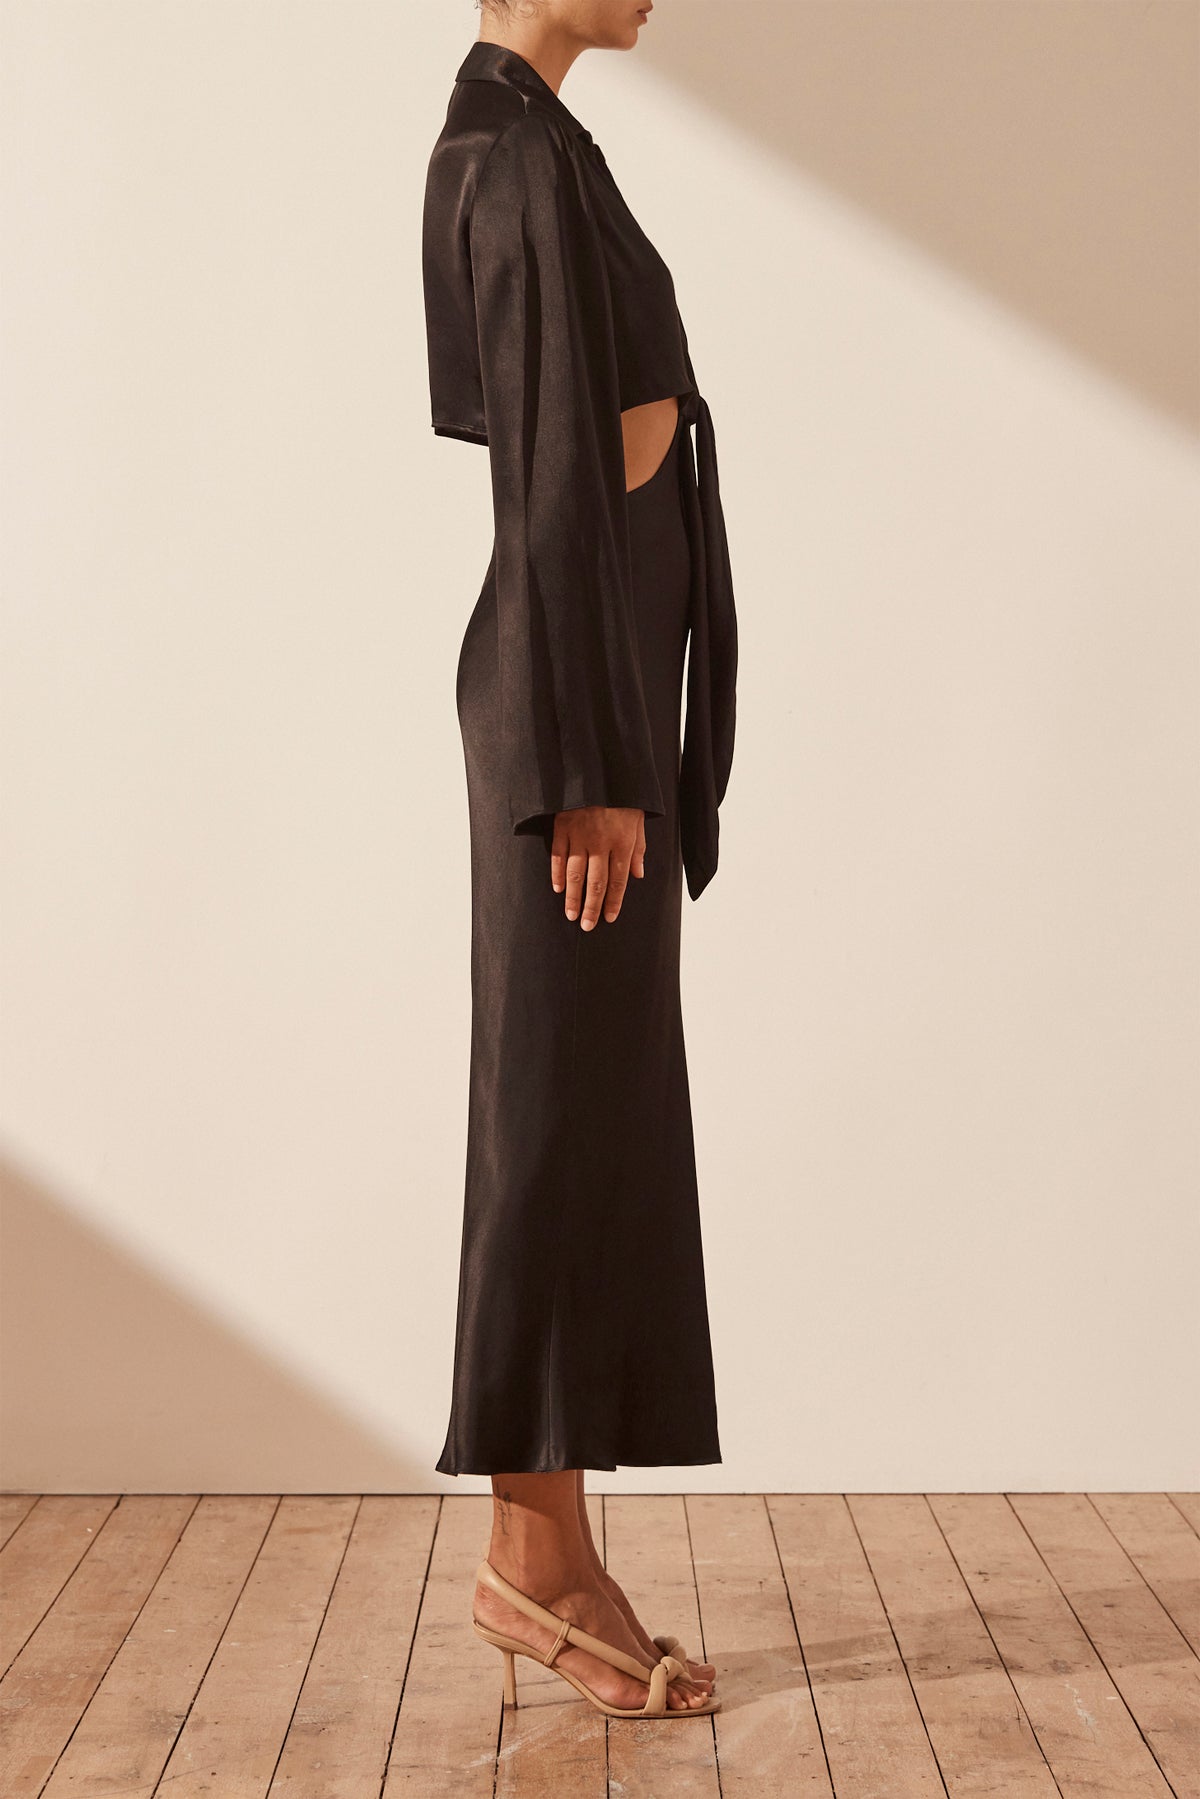 Ivory & Black Midi-Length Sheath Dress – Jolie Vaughan Mature